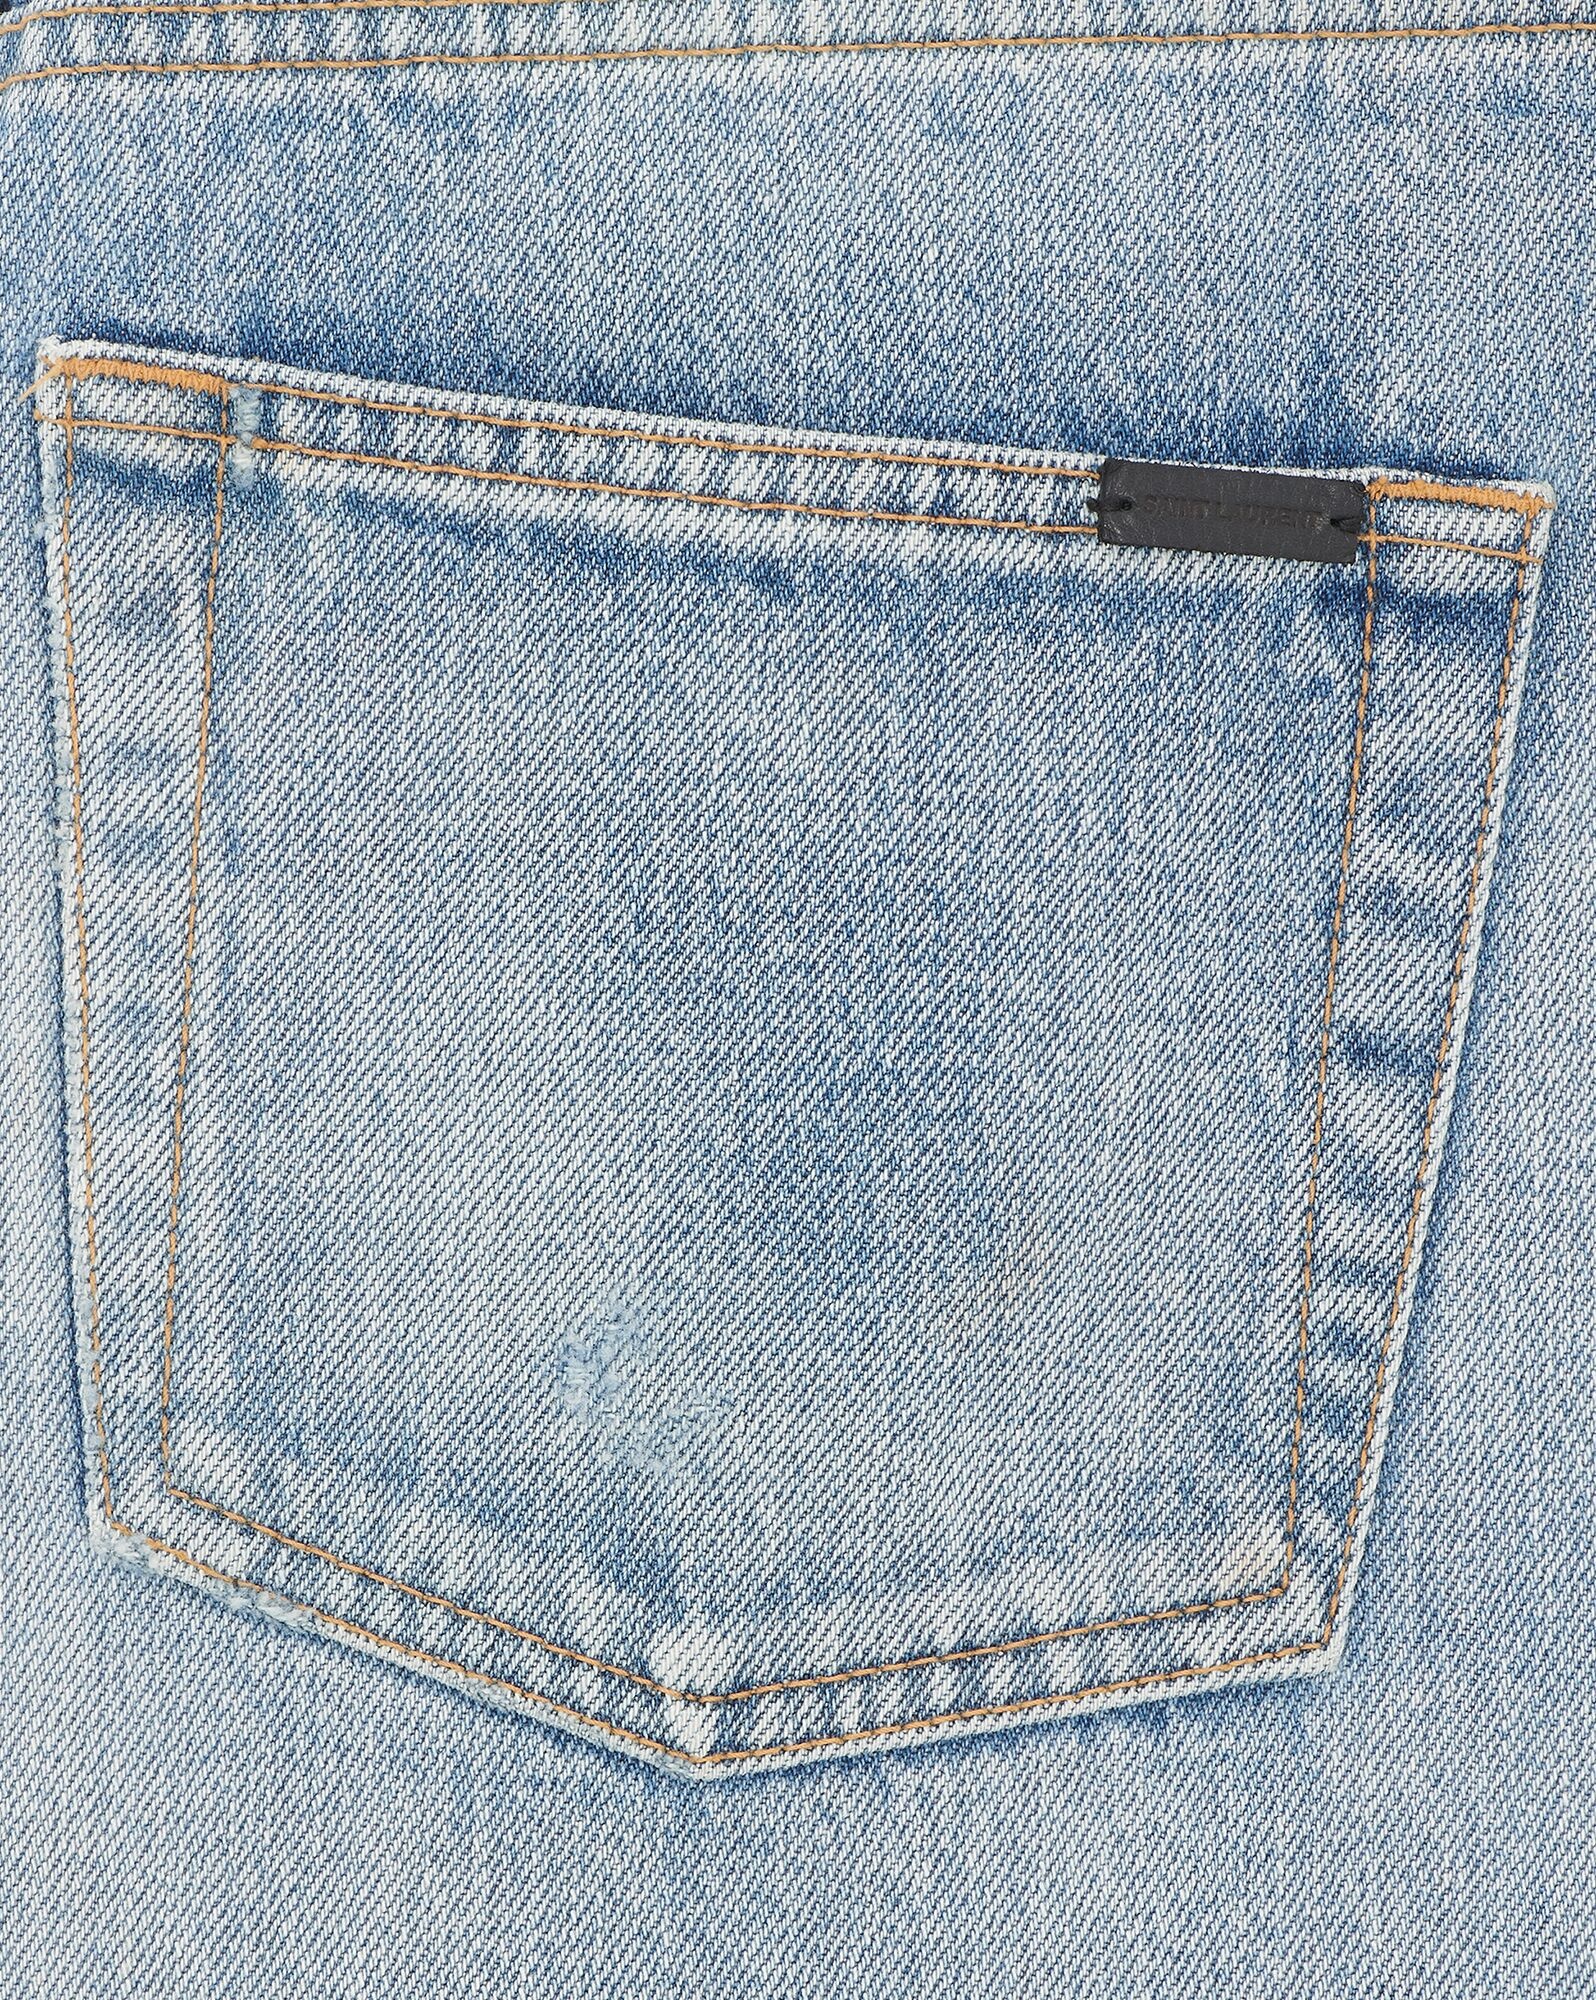 cassandre jeans in hawaii blue denim - 4